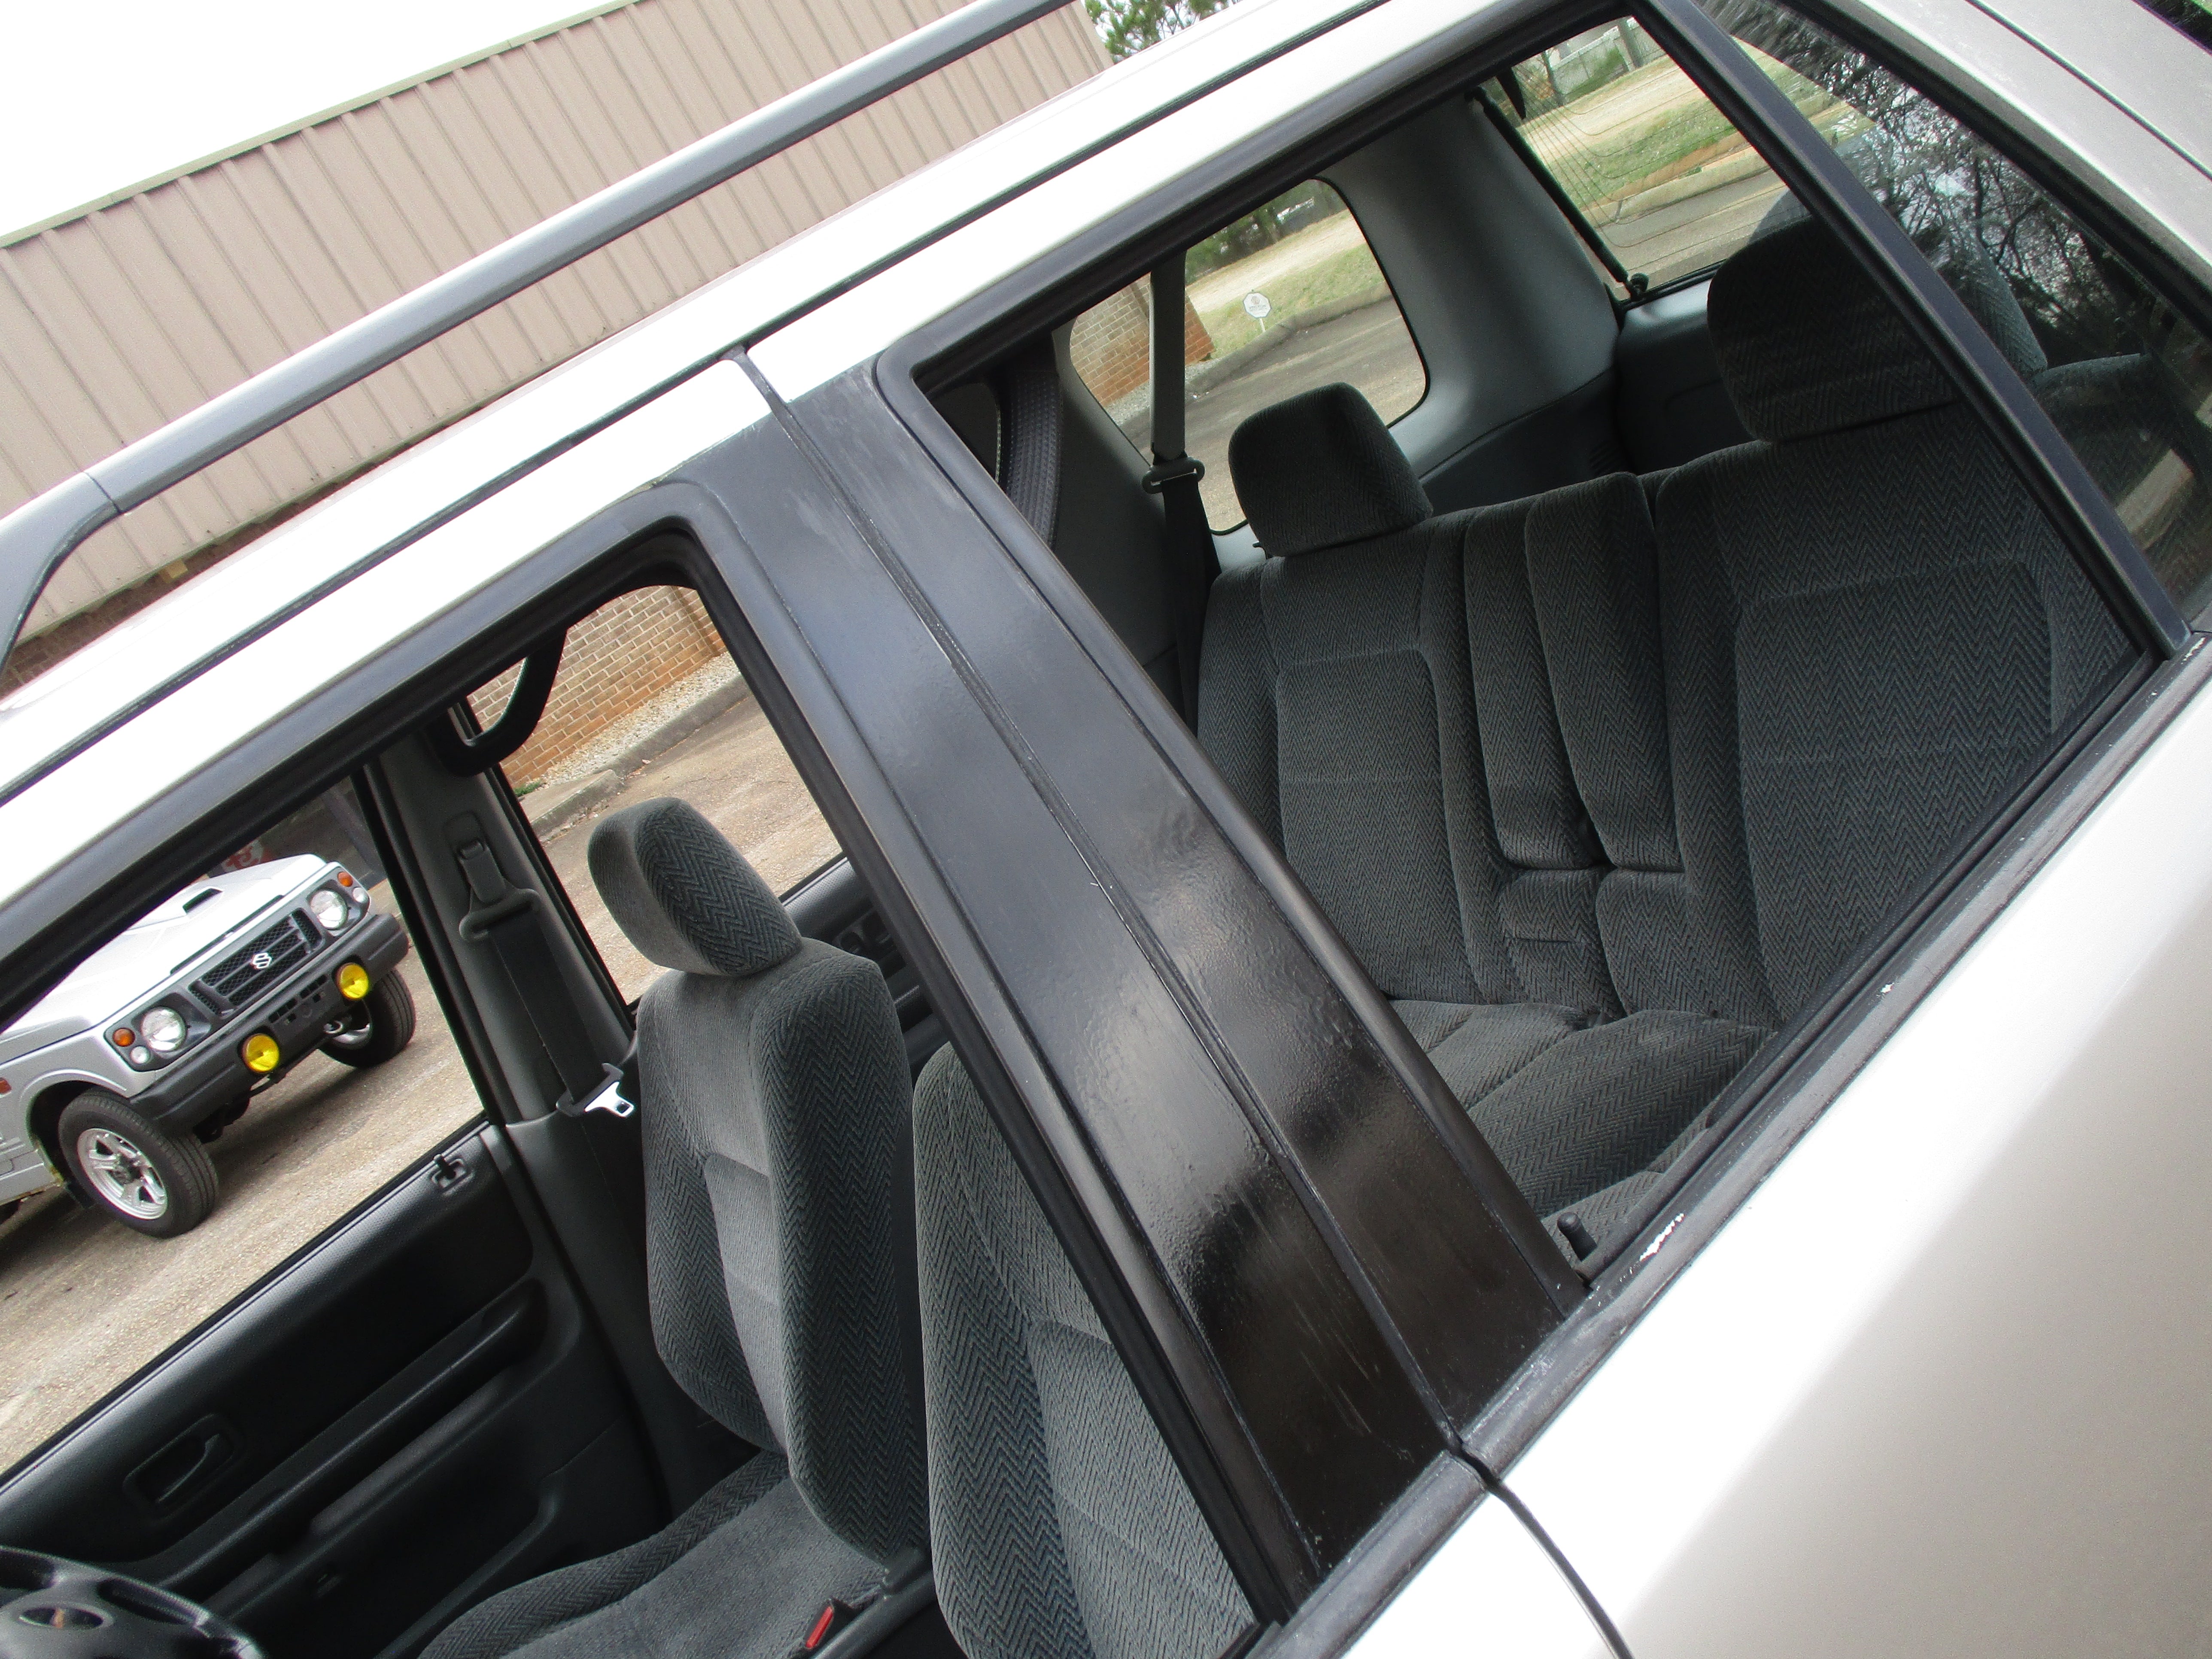 JDM 95 Honda CR-V 4WD RHD SUV with Sunroof Pending Sale